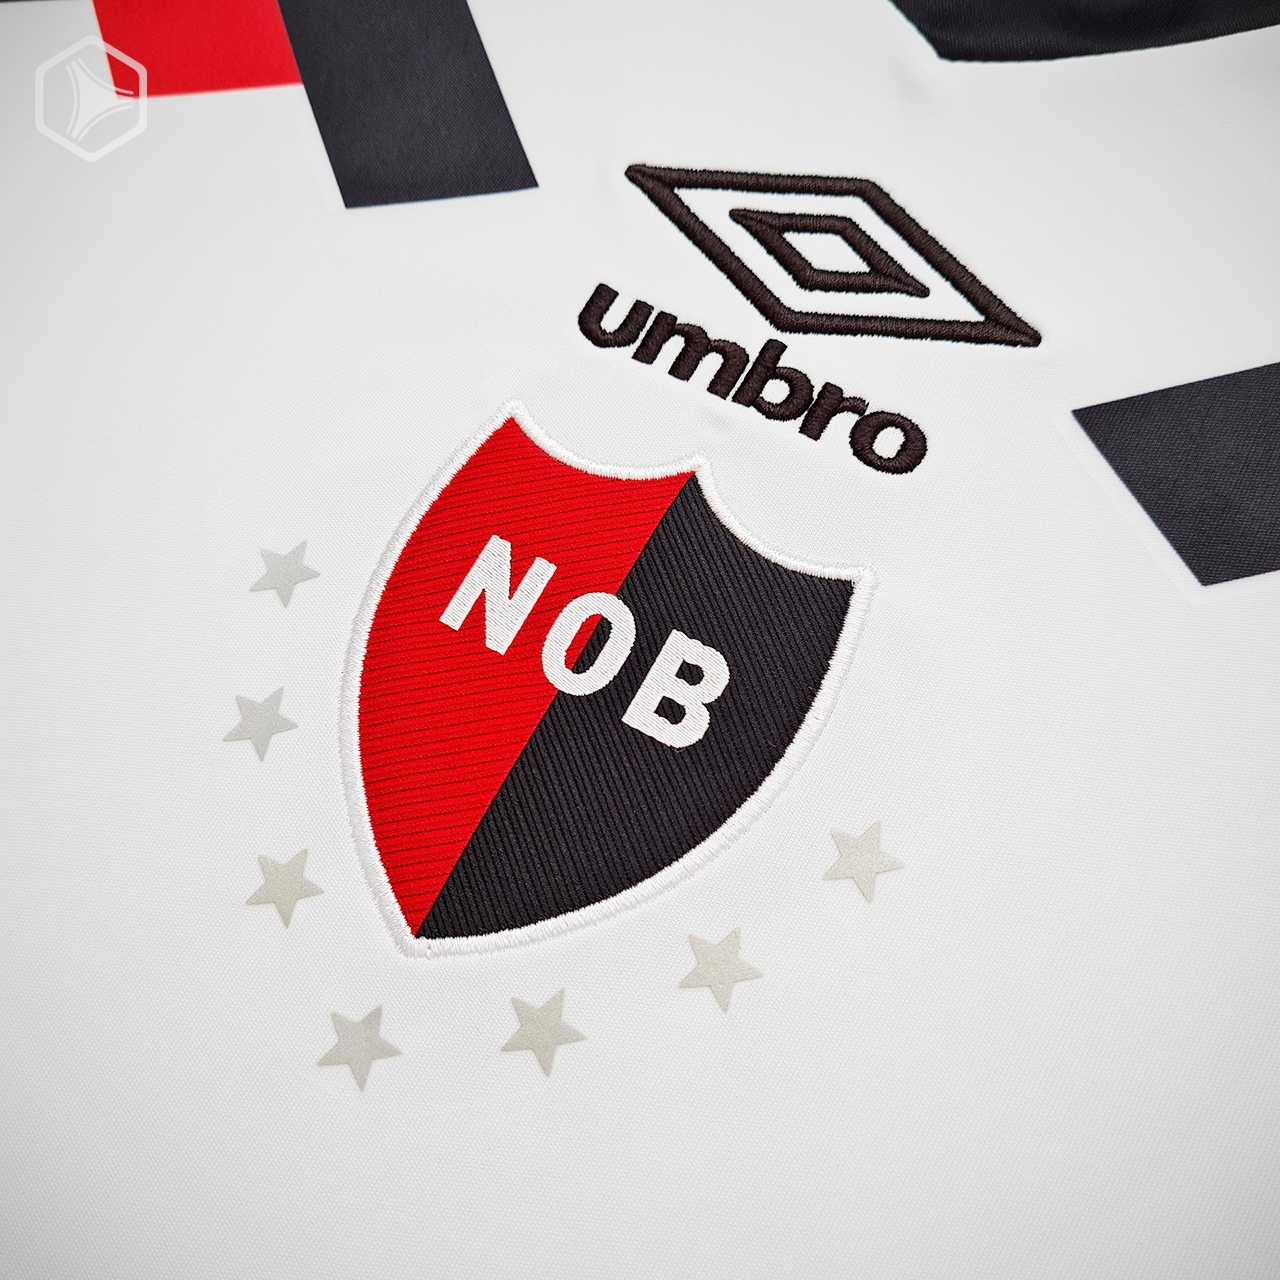 Camisetas Umbro de Newell's Old Boys 2021 2022 Alternativa